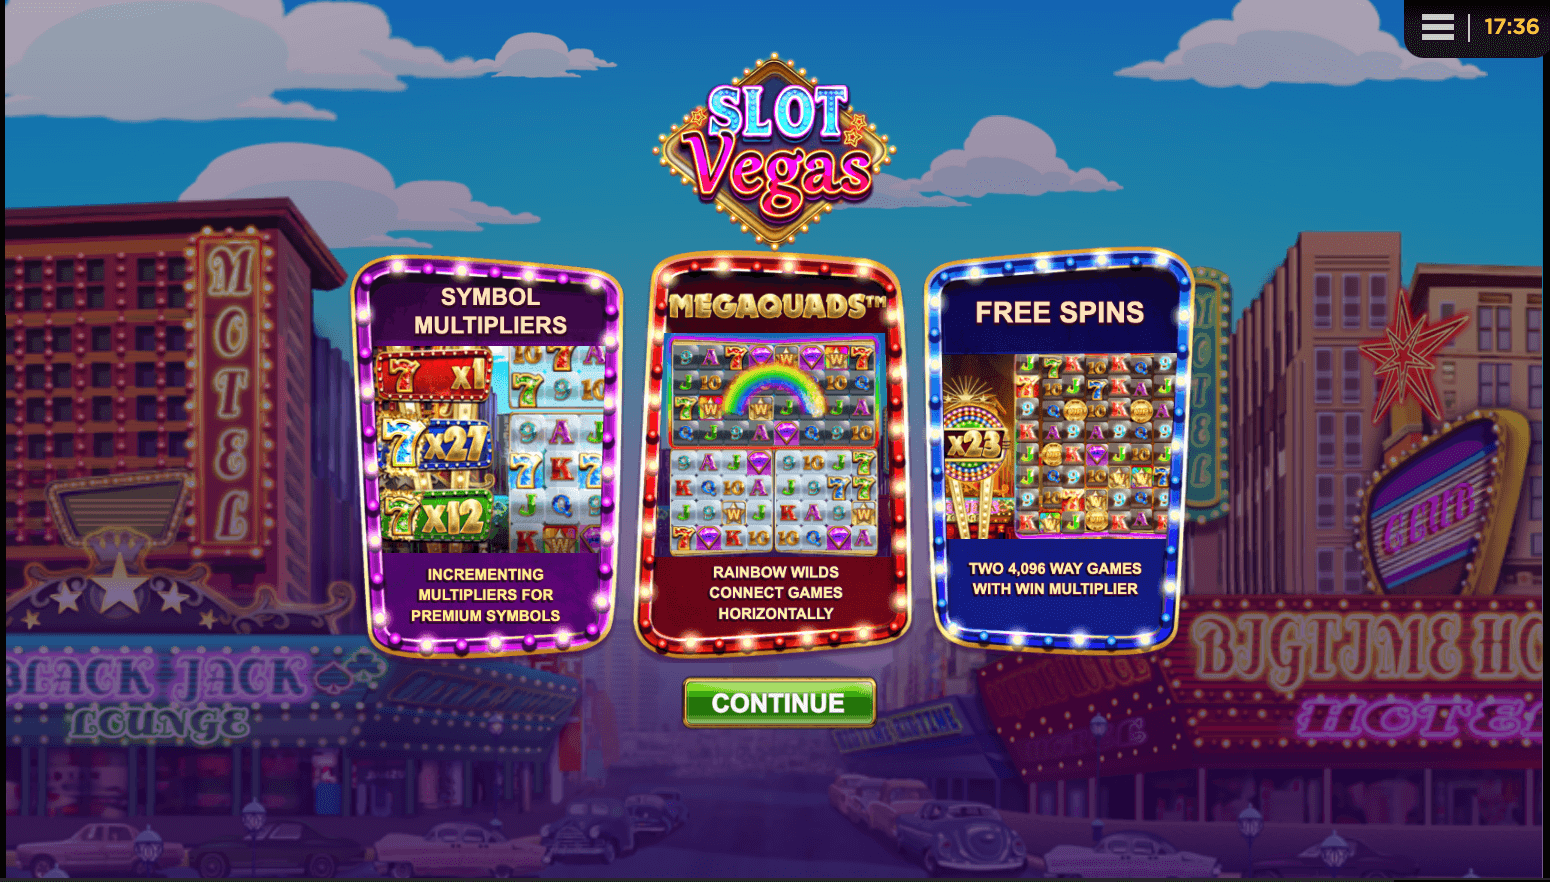 Slot Vegas Megaquads Spielablauf